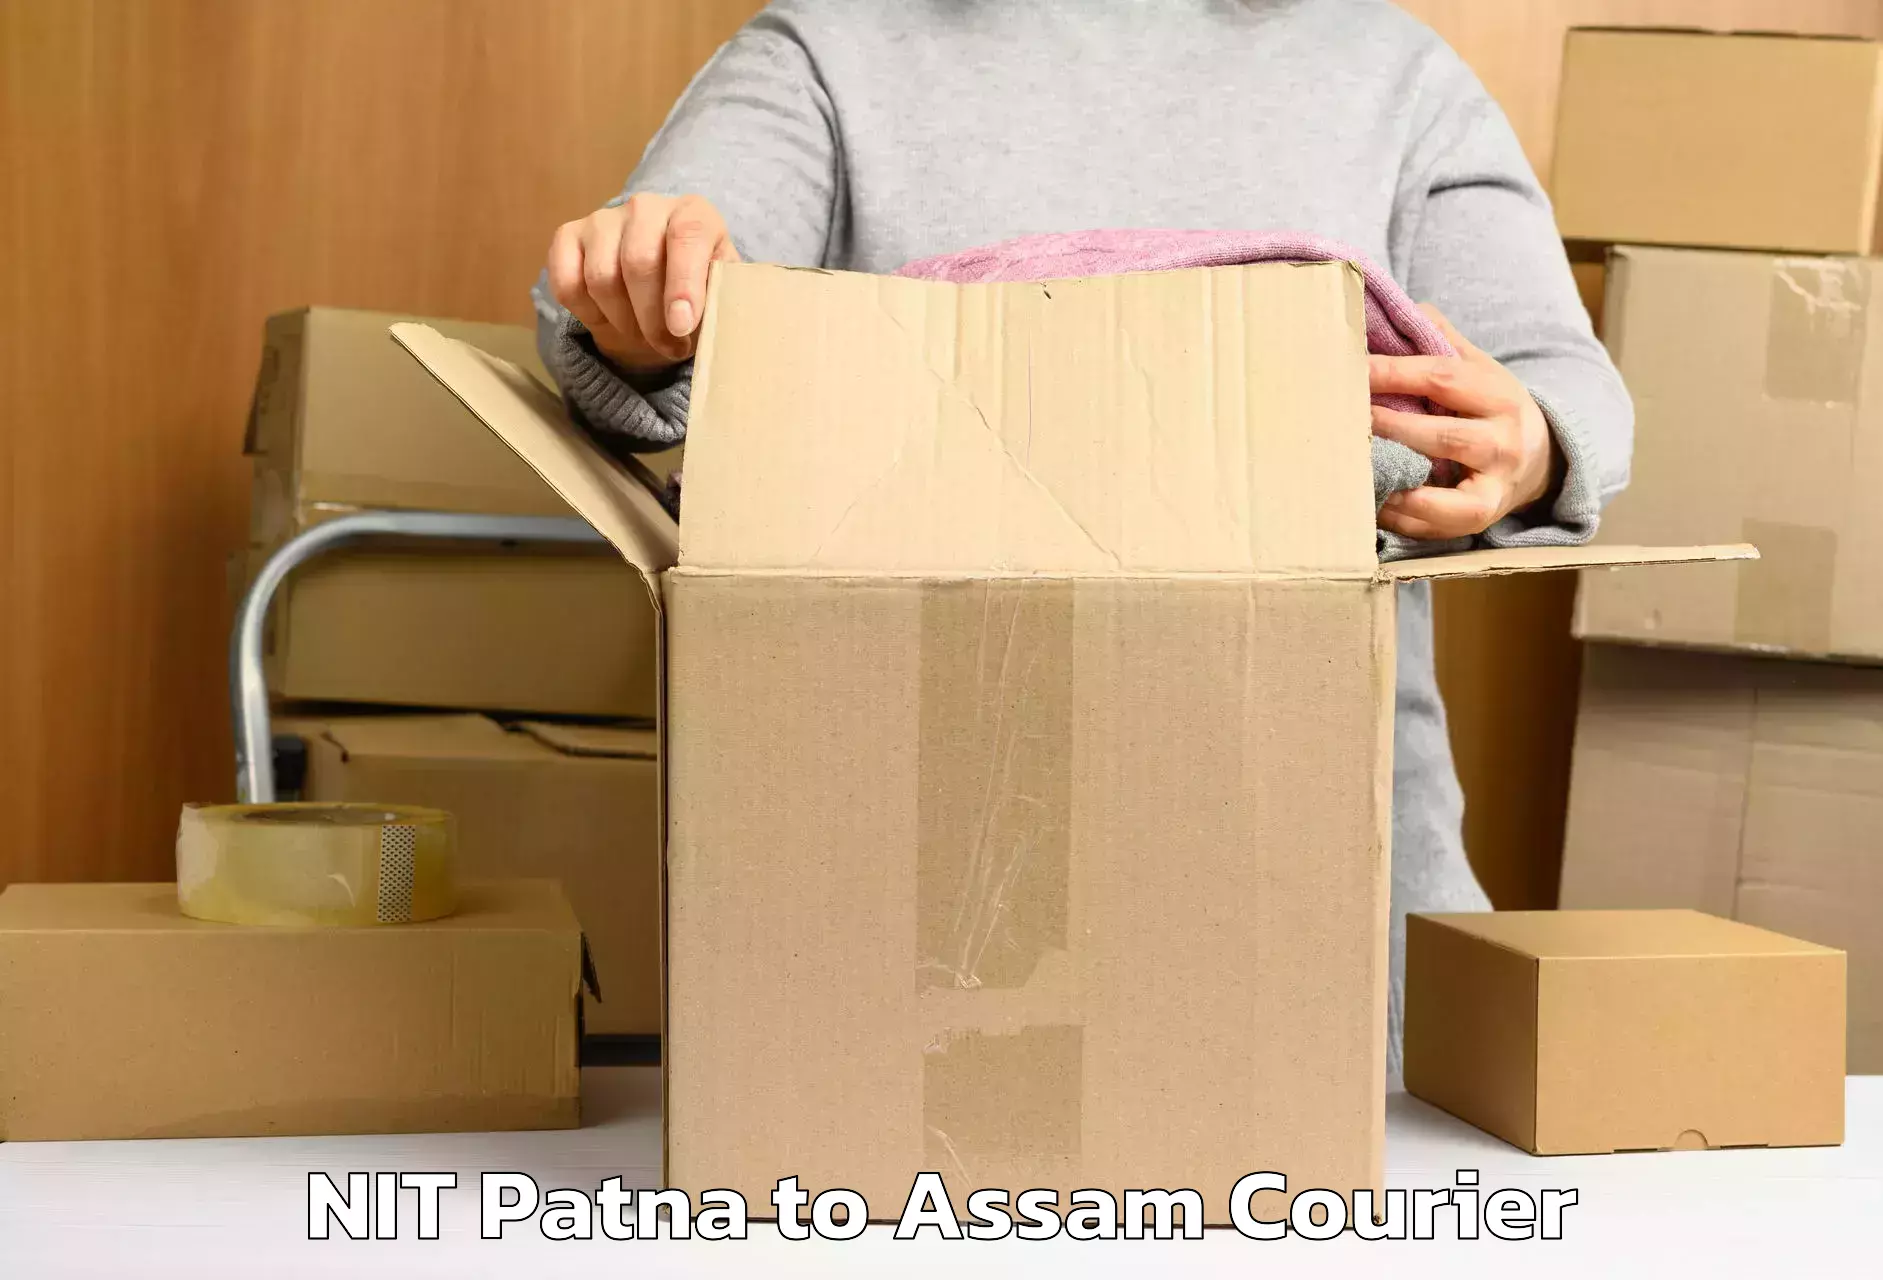 Luggage shipment tracking NIT Patna to Guwahati University